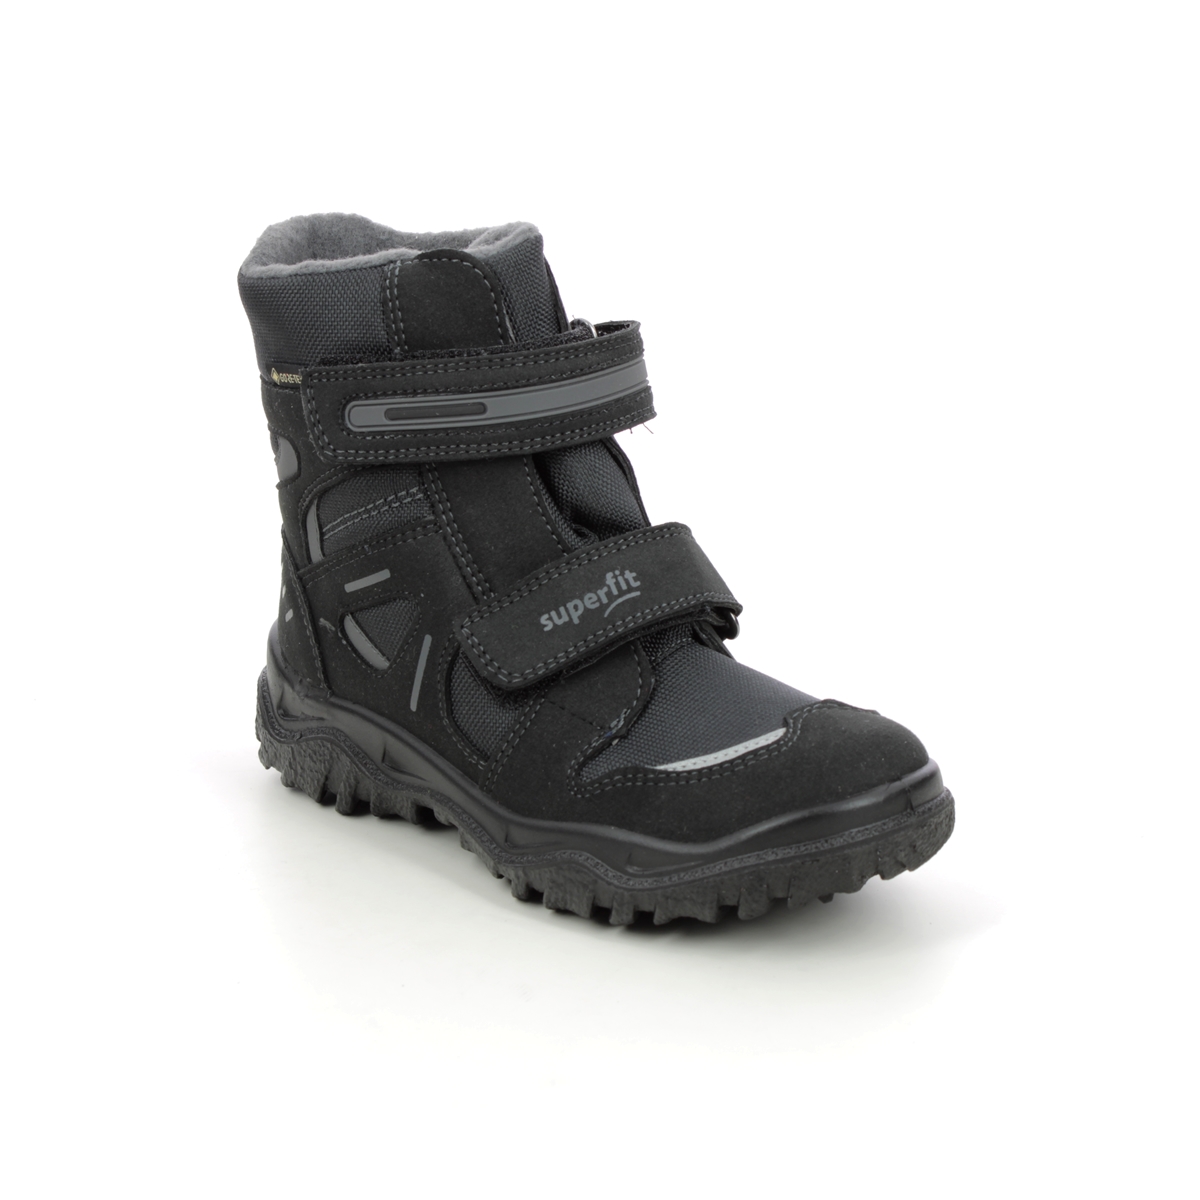 Superfit Husky Jnr Gore Black Kids Boys Boots 0809080-0600 In Size 31 In Plain Black For kids